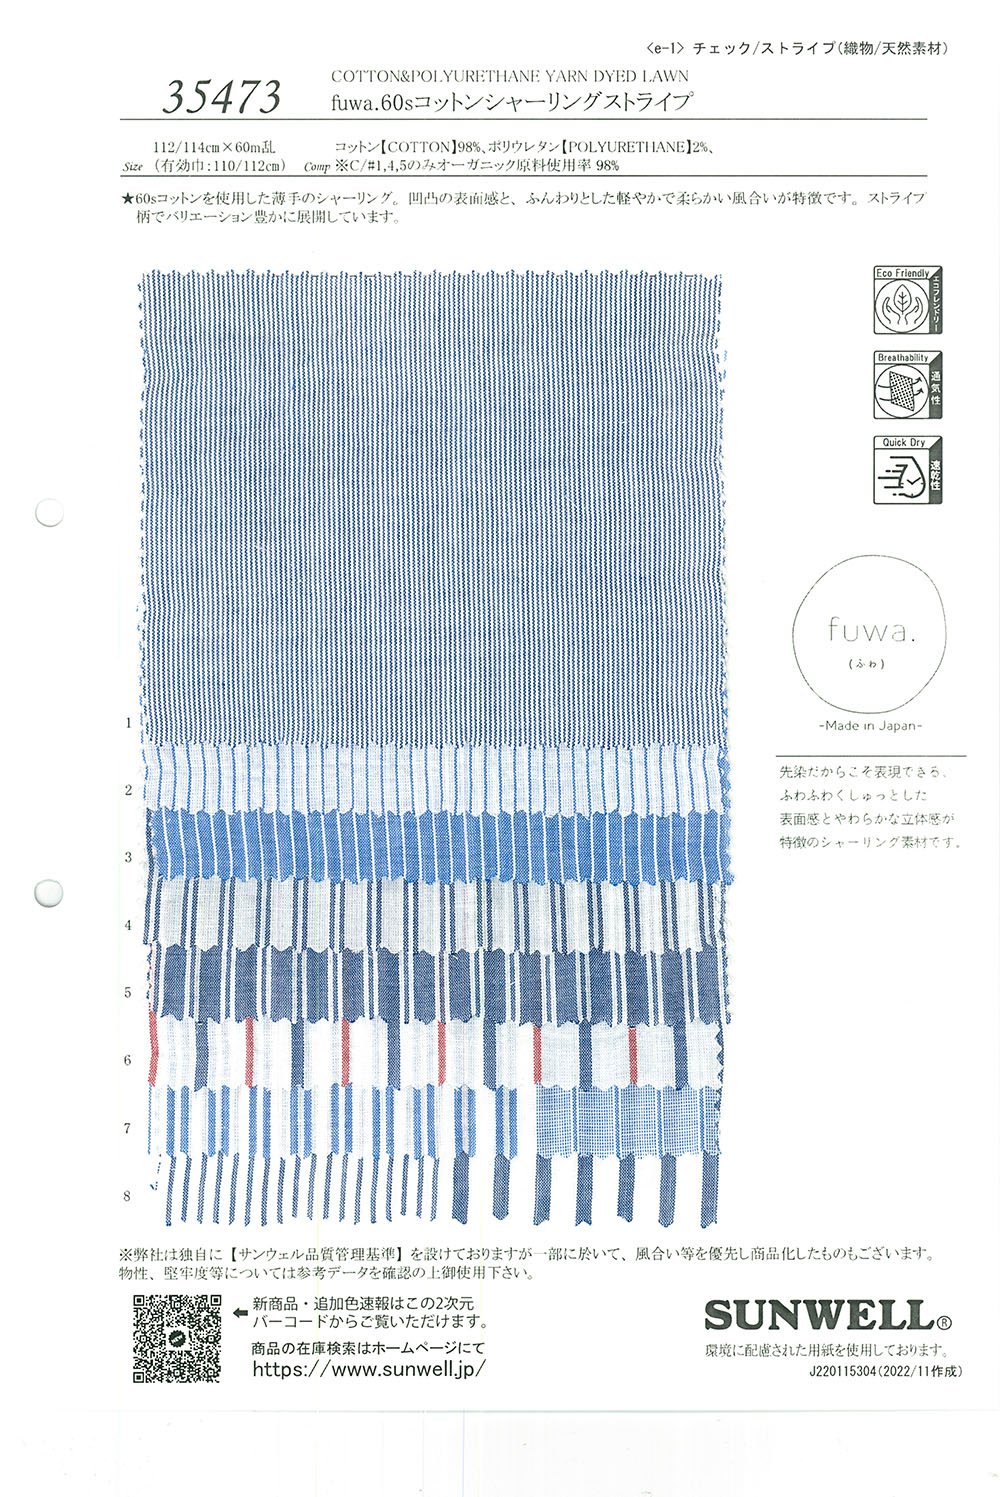 35473 Fuwa. 60 Einfädiger Baumwoll-Kräuselstreifen[Textilgewebe] SUNWELL